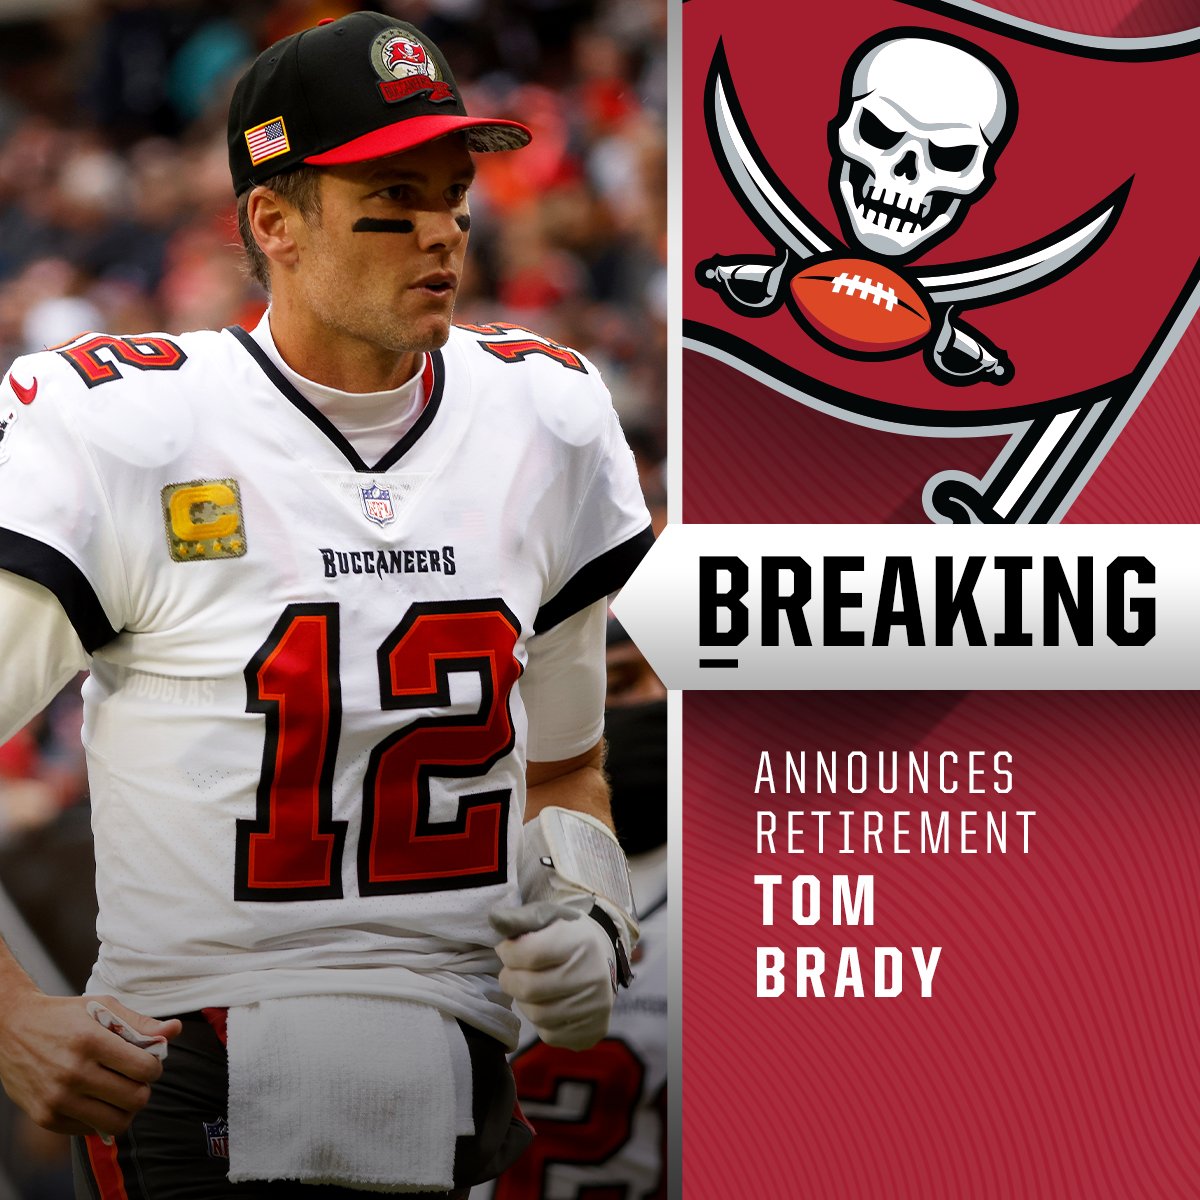 BREAKING: Tom Brady announces he is officially retiring.